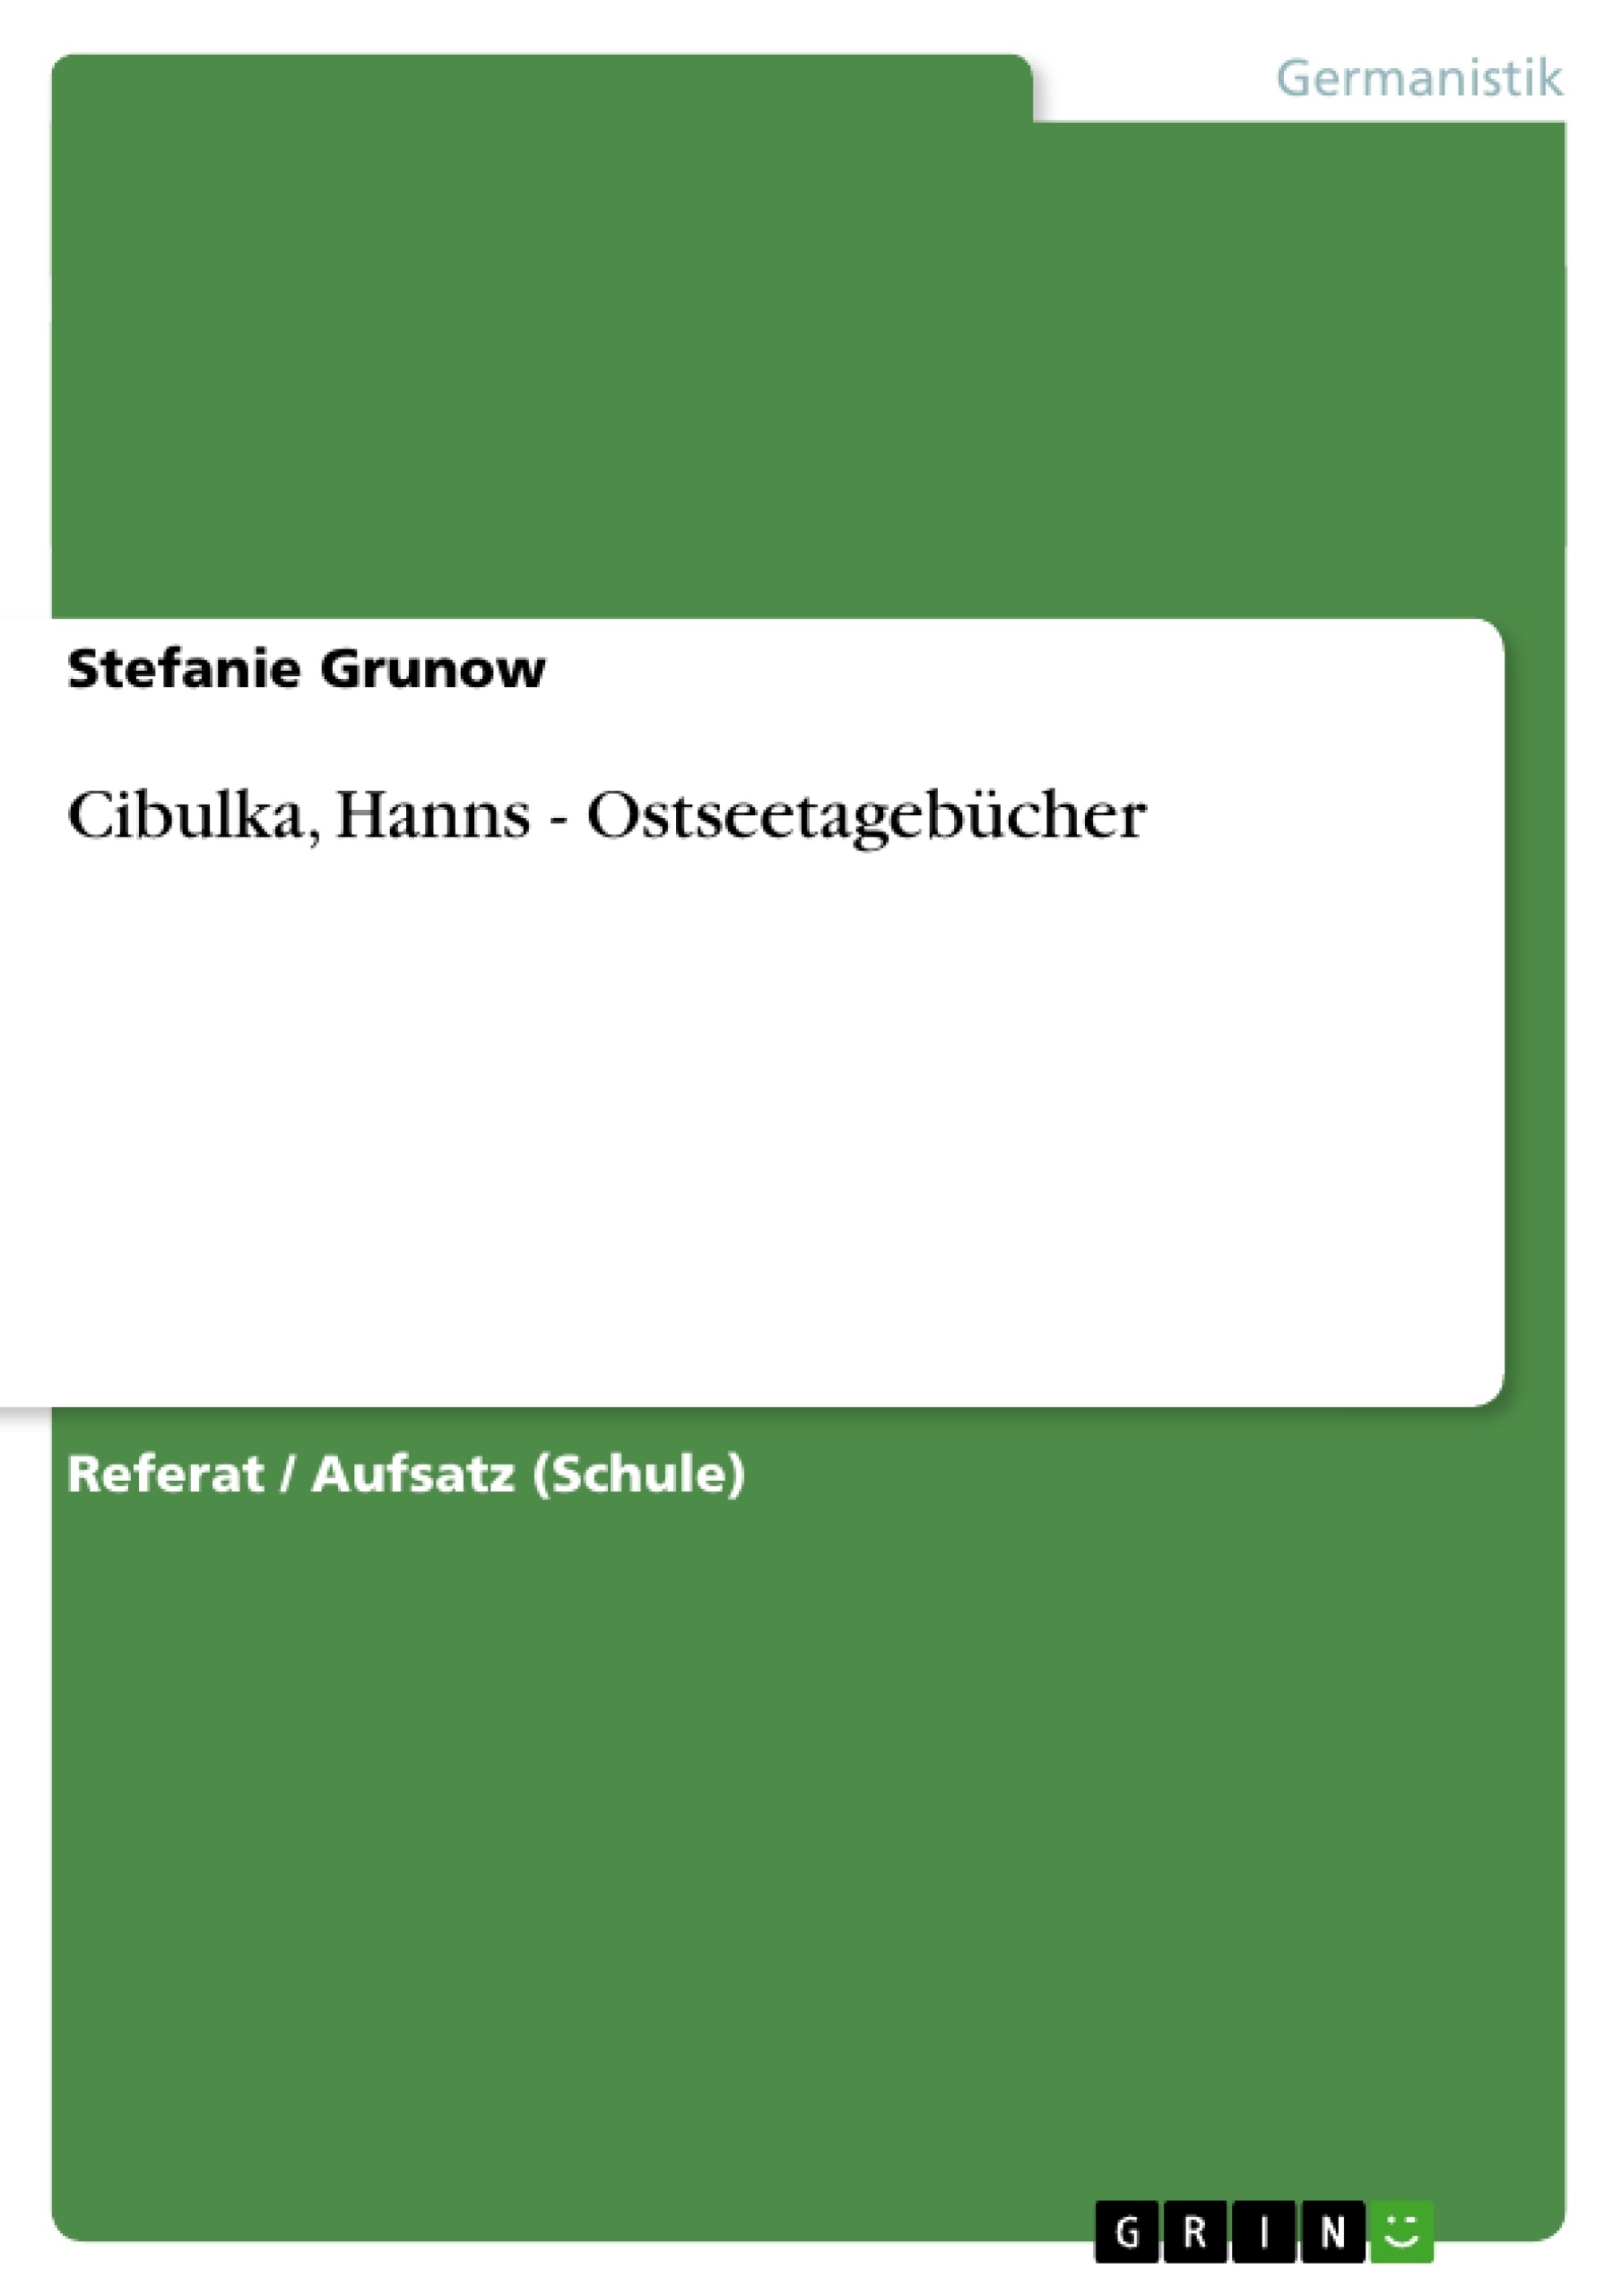 Titel: Cibulka, Hanns - Ostseetagebücher